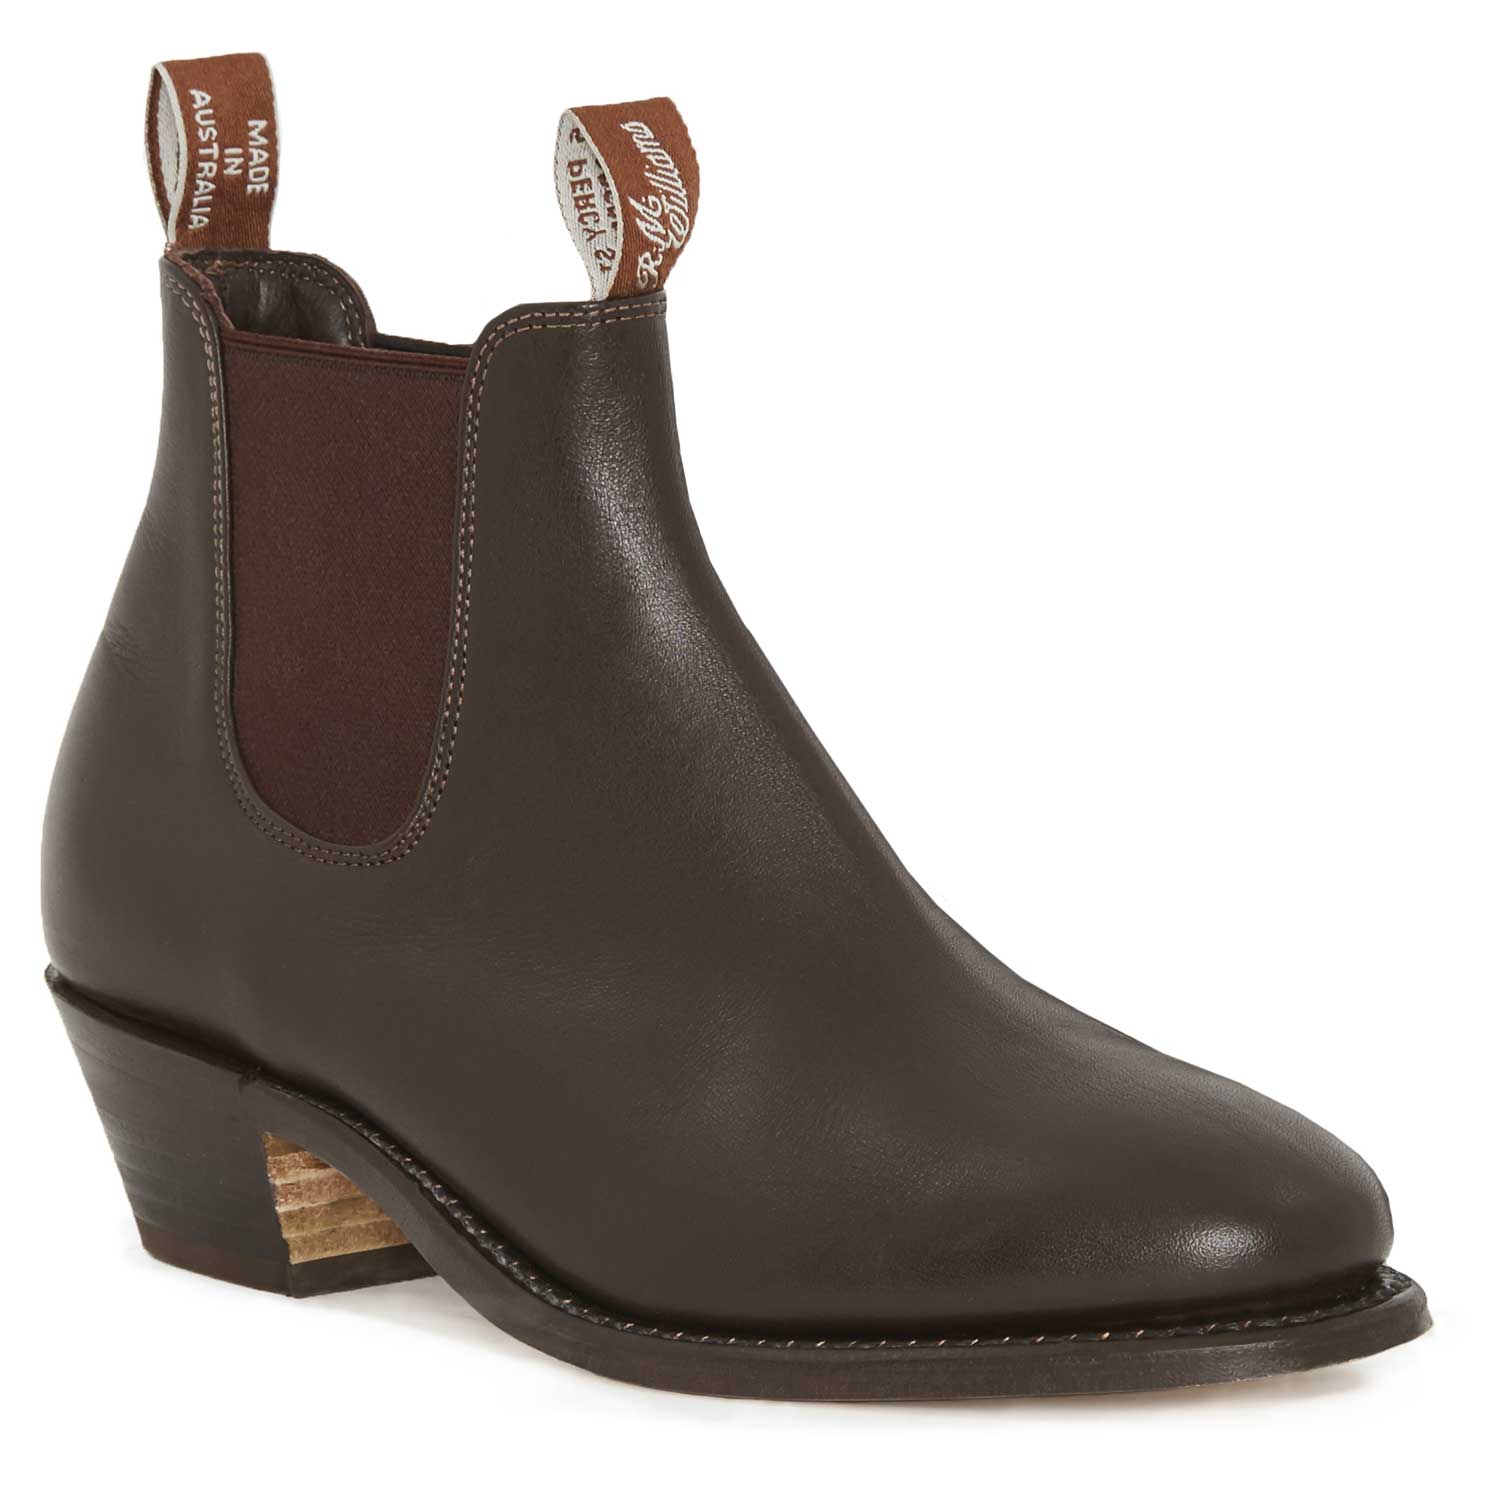 RM WILLIAMS Boots - Ladies Adelaide High Heel - Chestnut